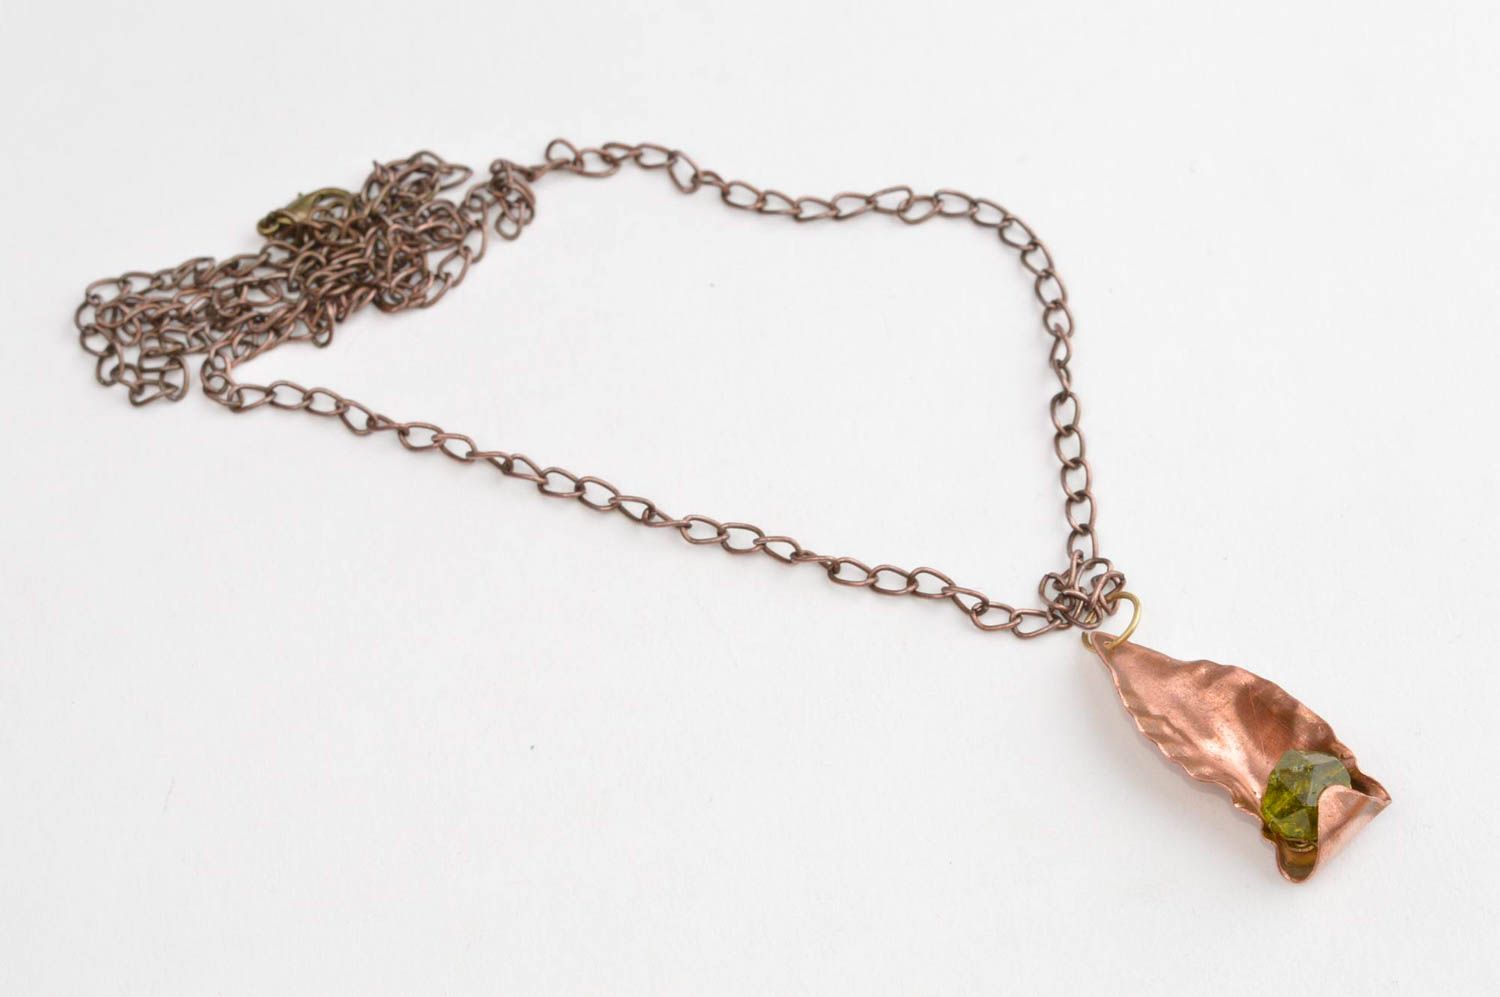 Handmade jewelry unusual neck accessory gift ideas copper pendant for girls photo 3